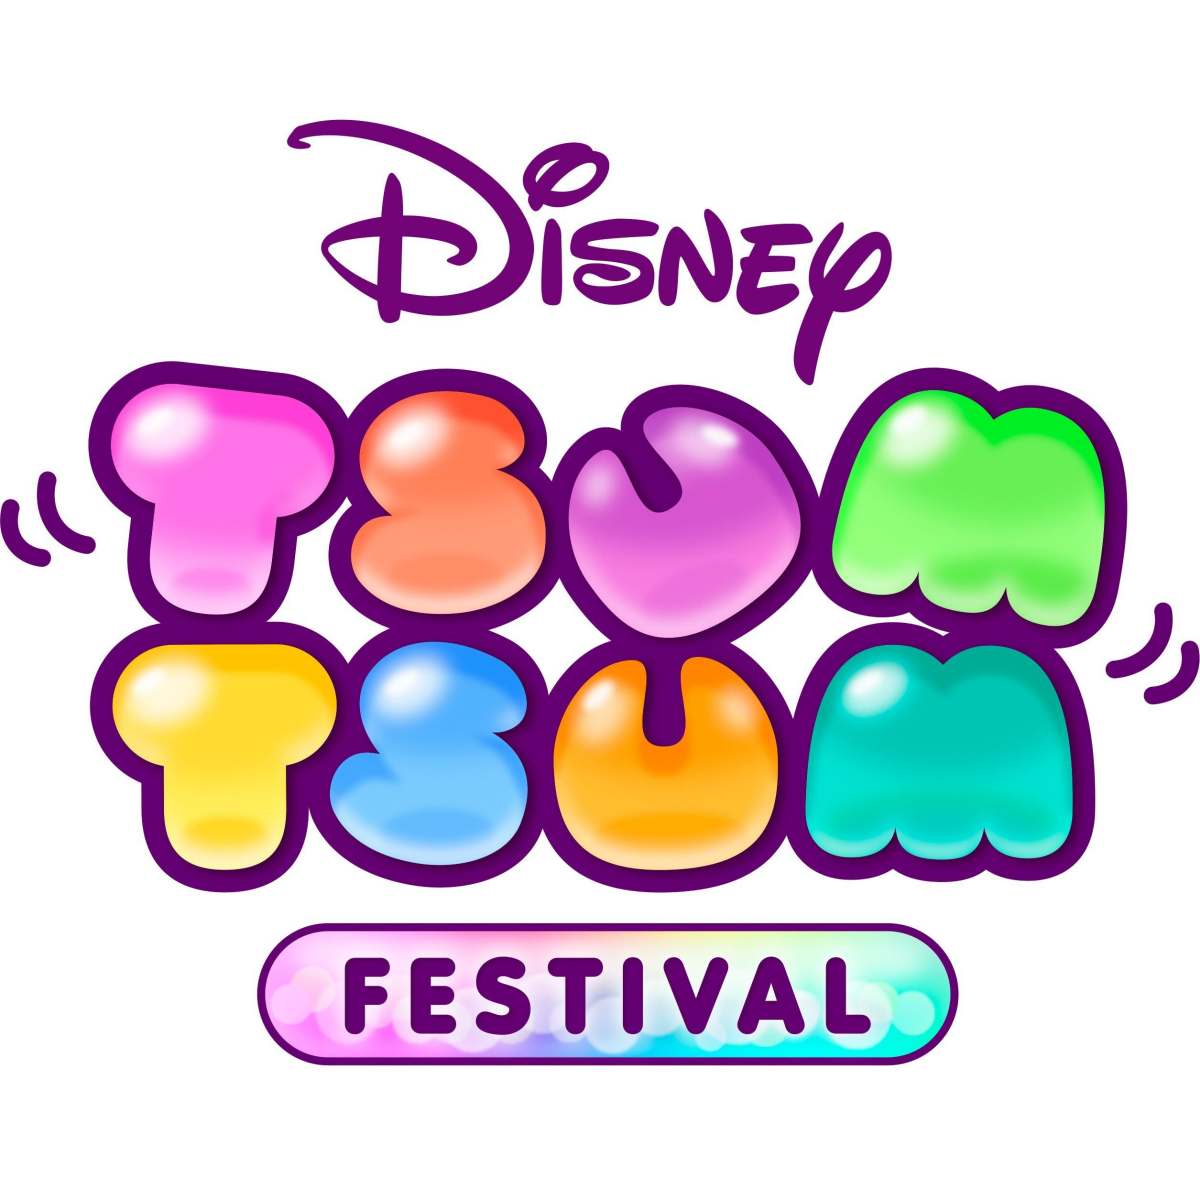 Disney Tsum Tsum Festival datang ke barat pada 8 November